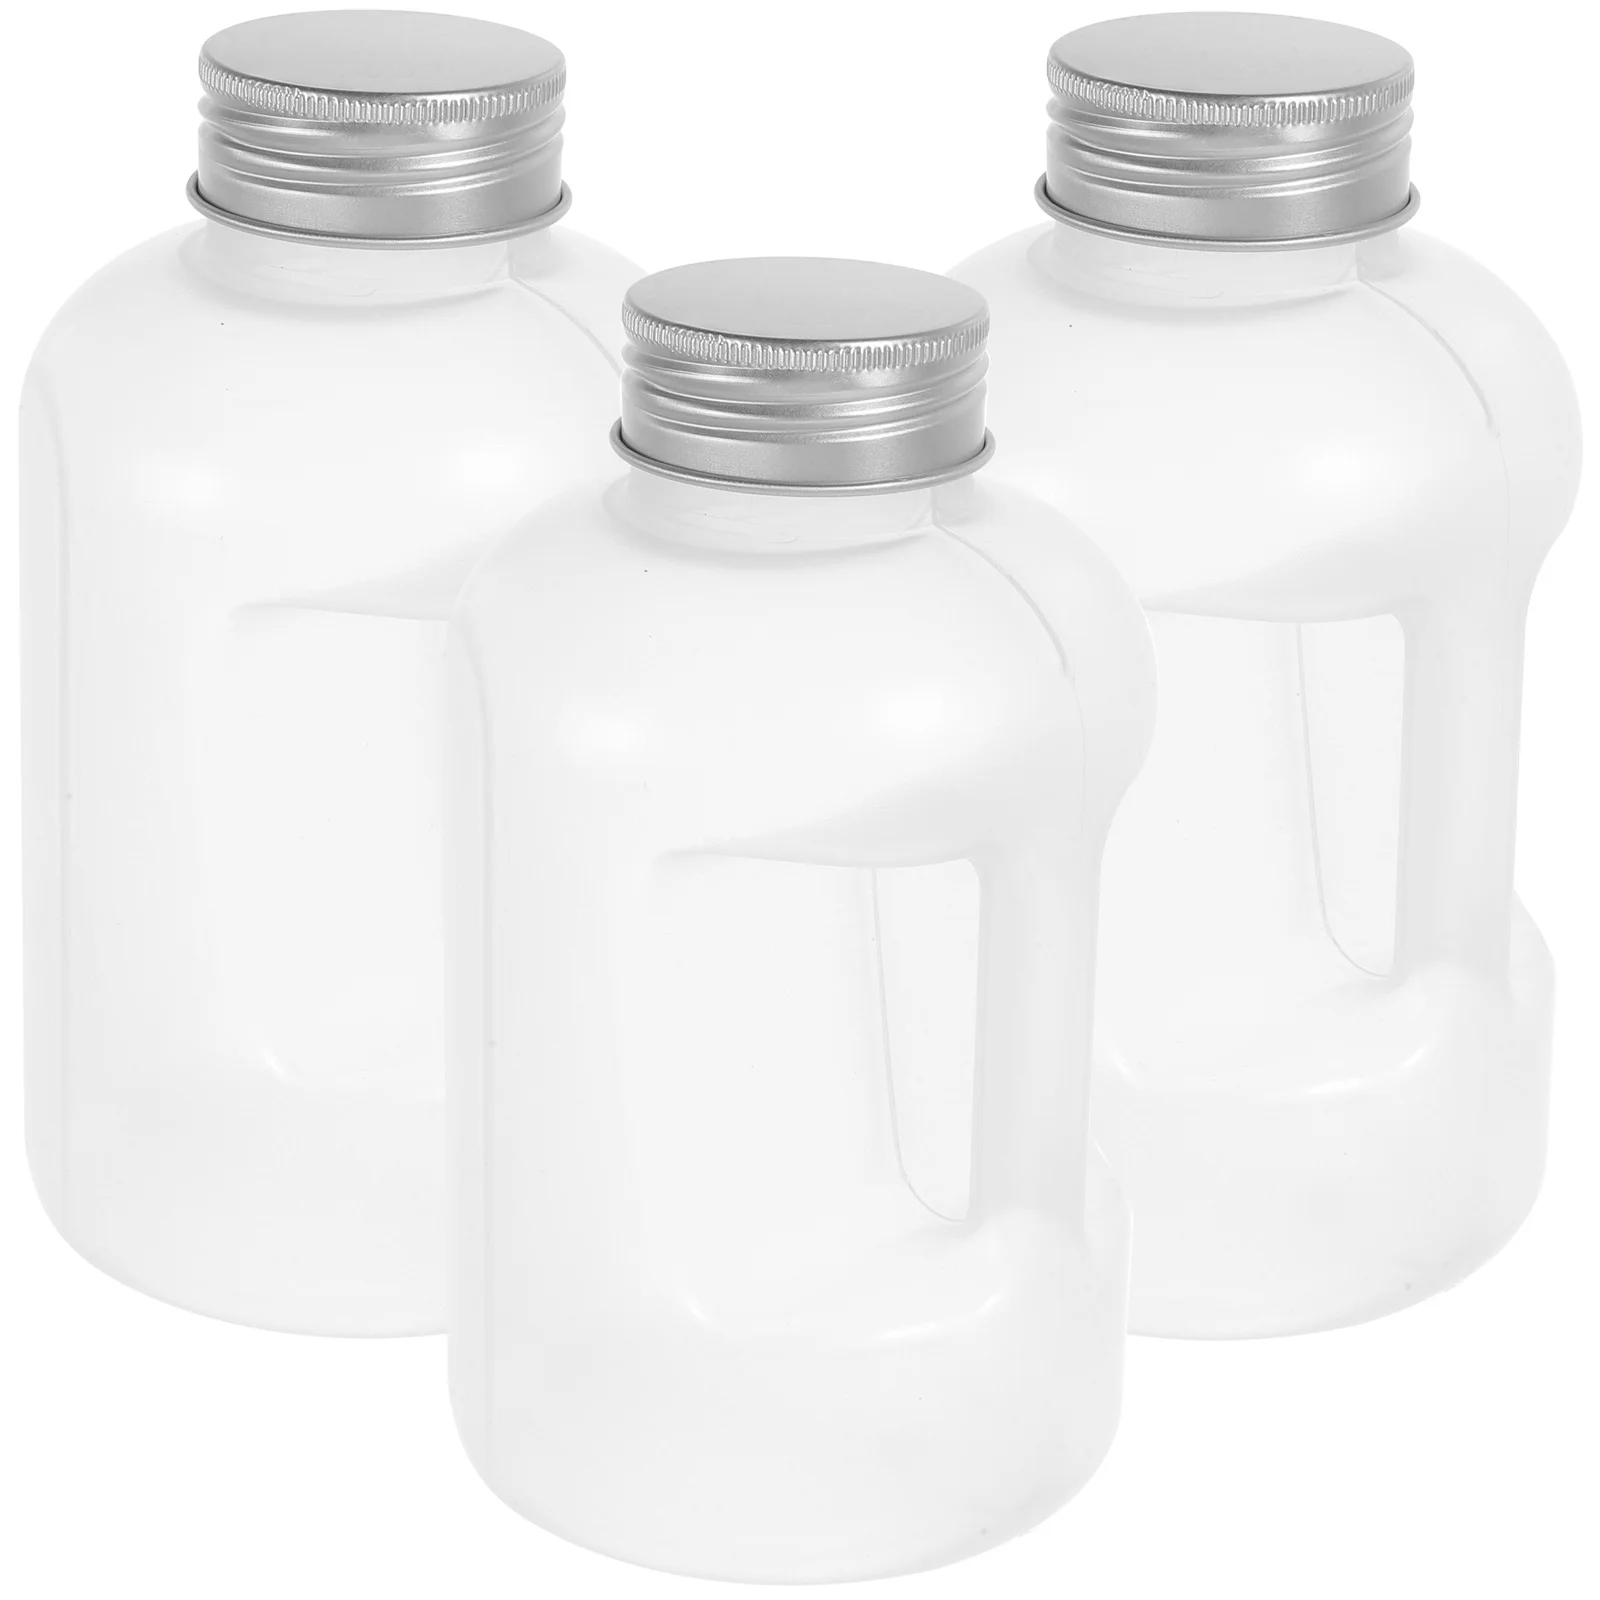 

Juice Bottle Clear Milk Carton Reusable Water Bottles Fridge Storage Containers Tea Bucket Jugs